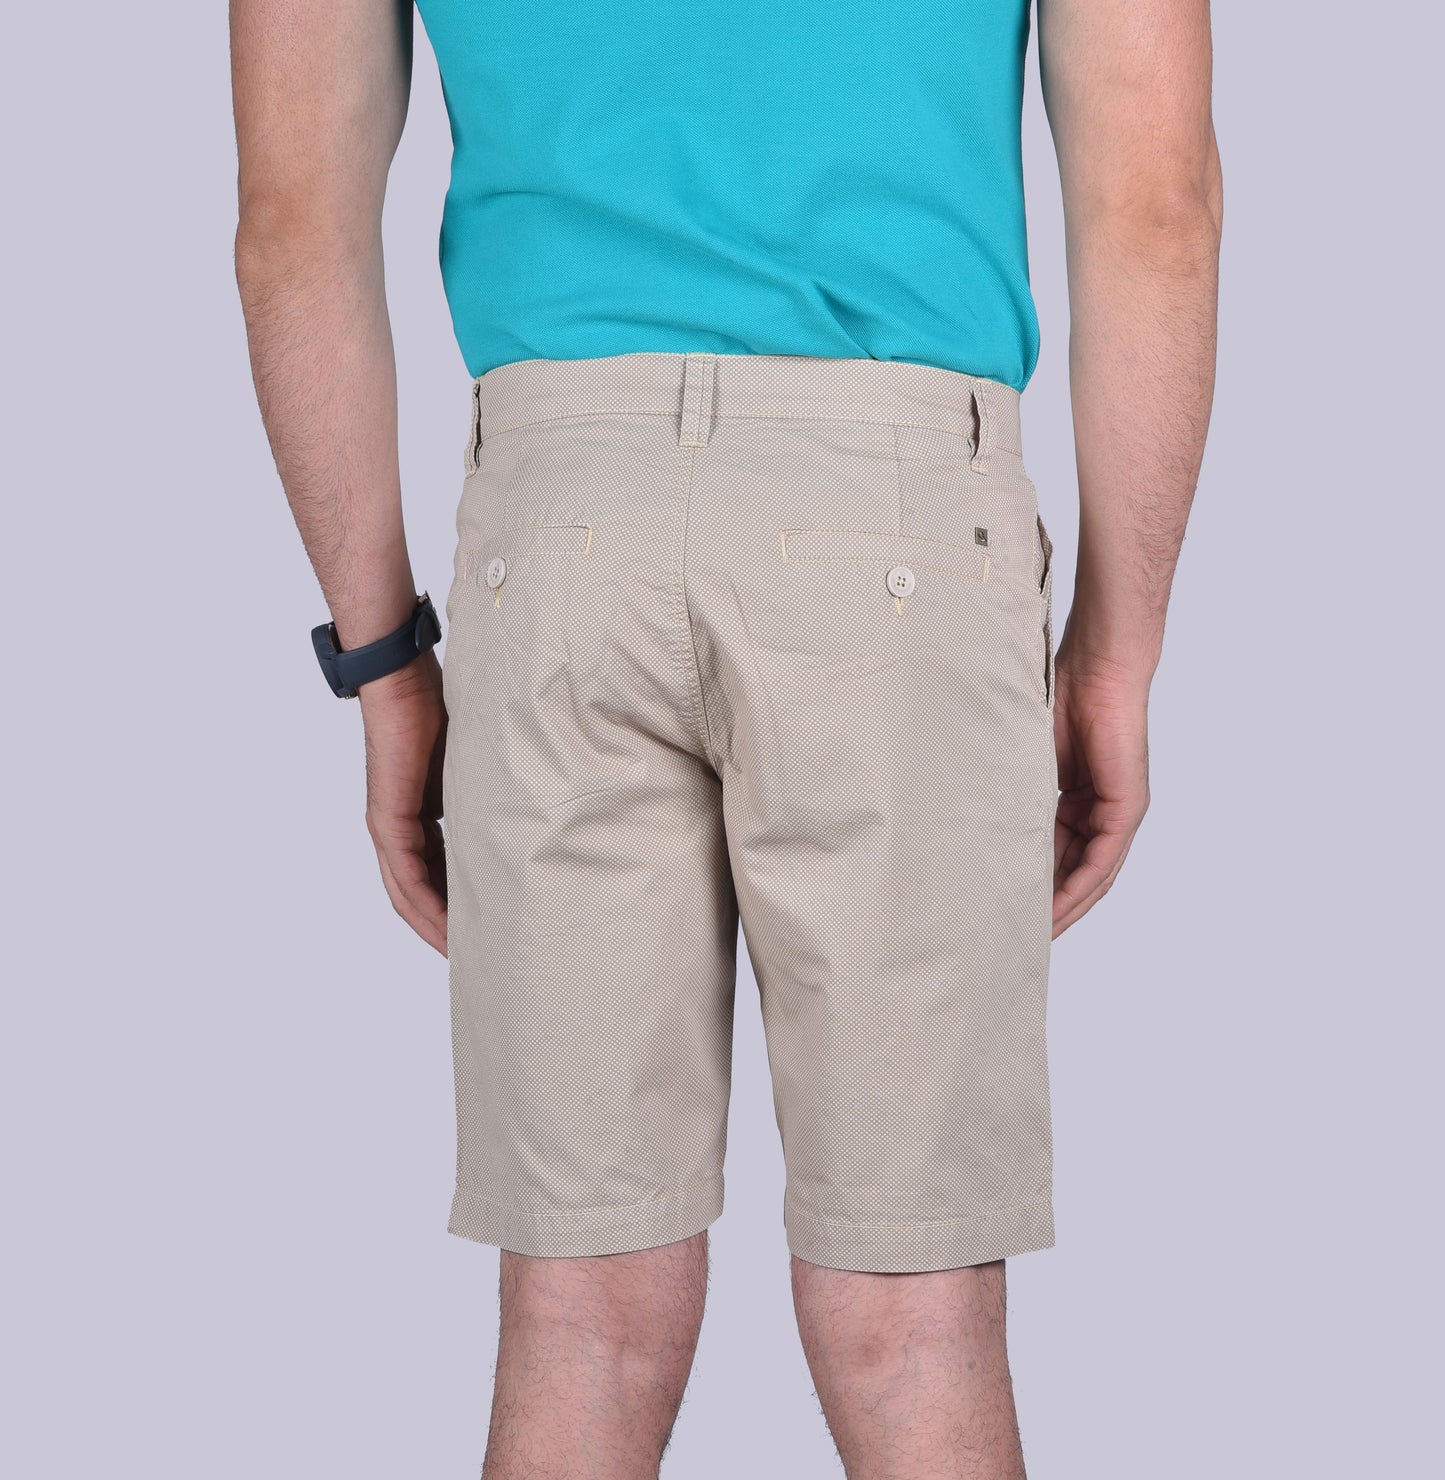 Beige Uber cool shorts. - urban clothing co.